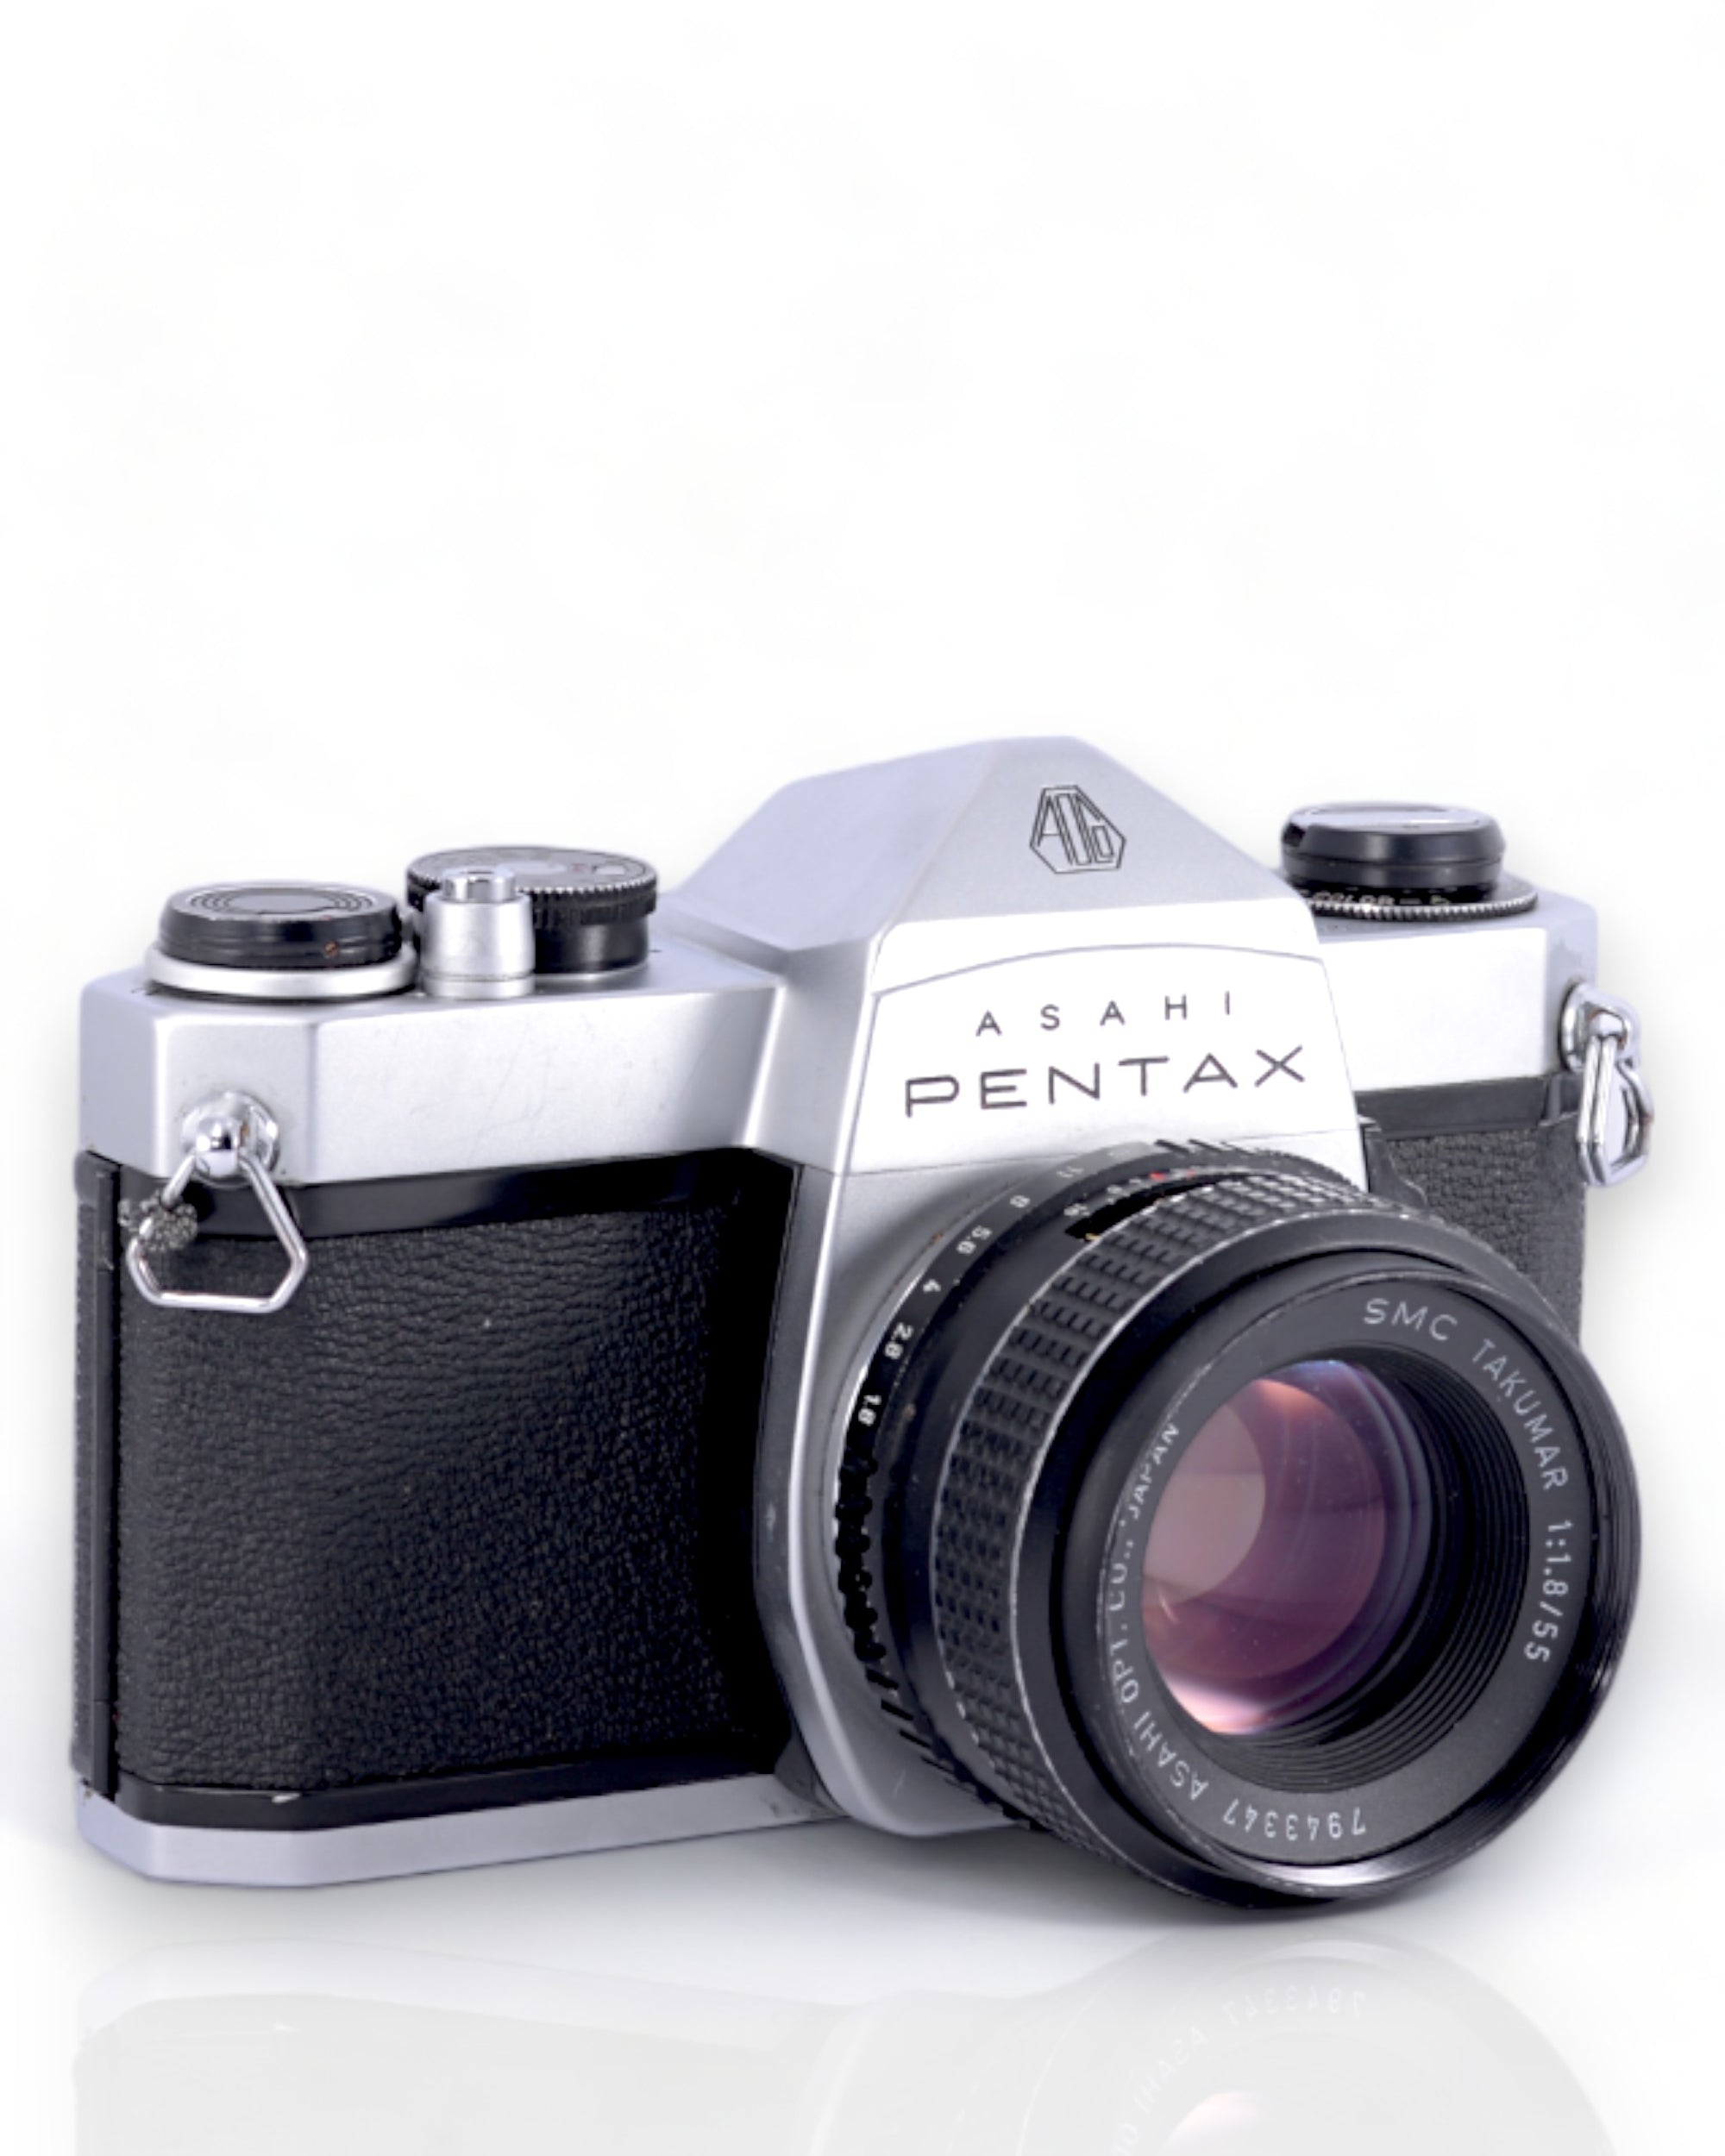 Pentax Spotmatic SP1000 35mm SLR film camera with 55mm f1.8 lens